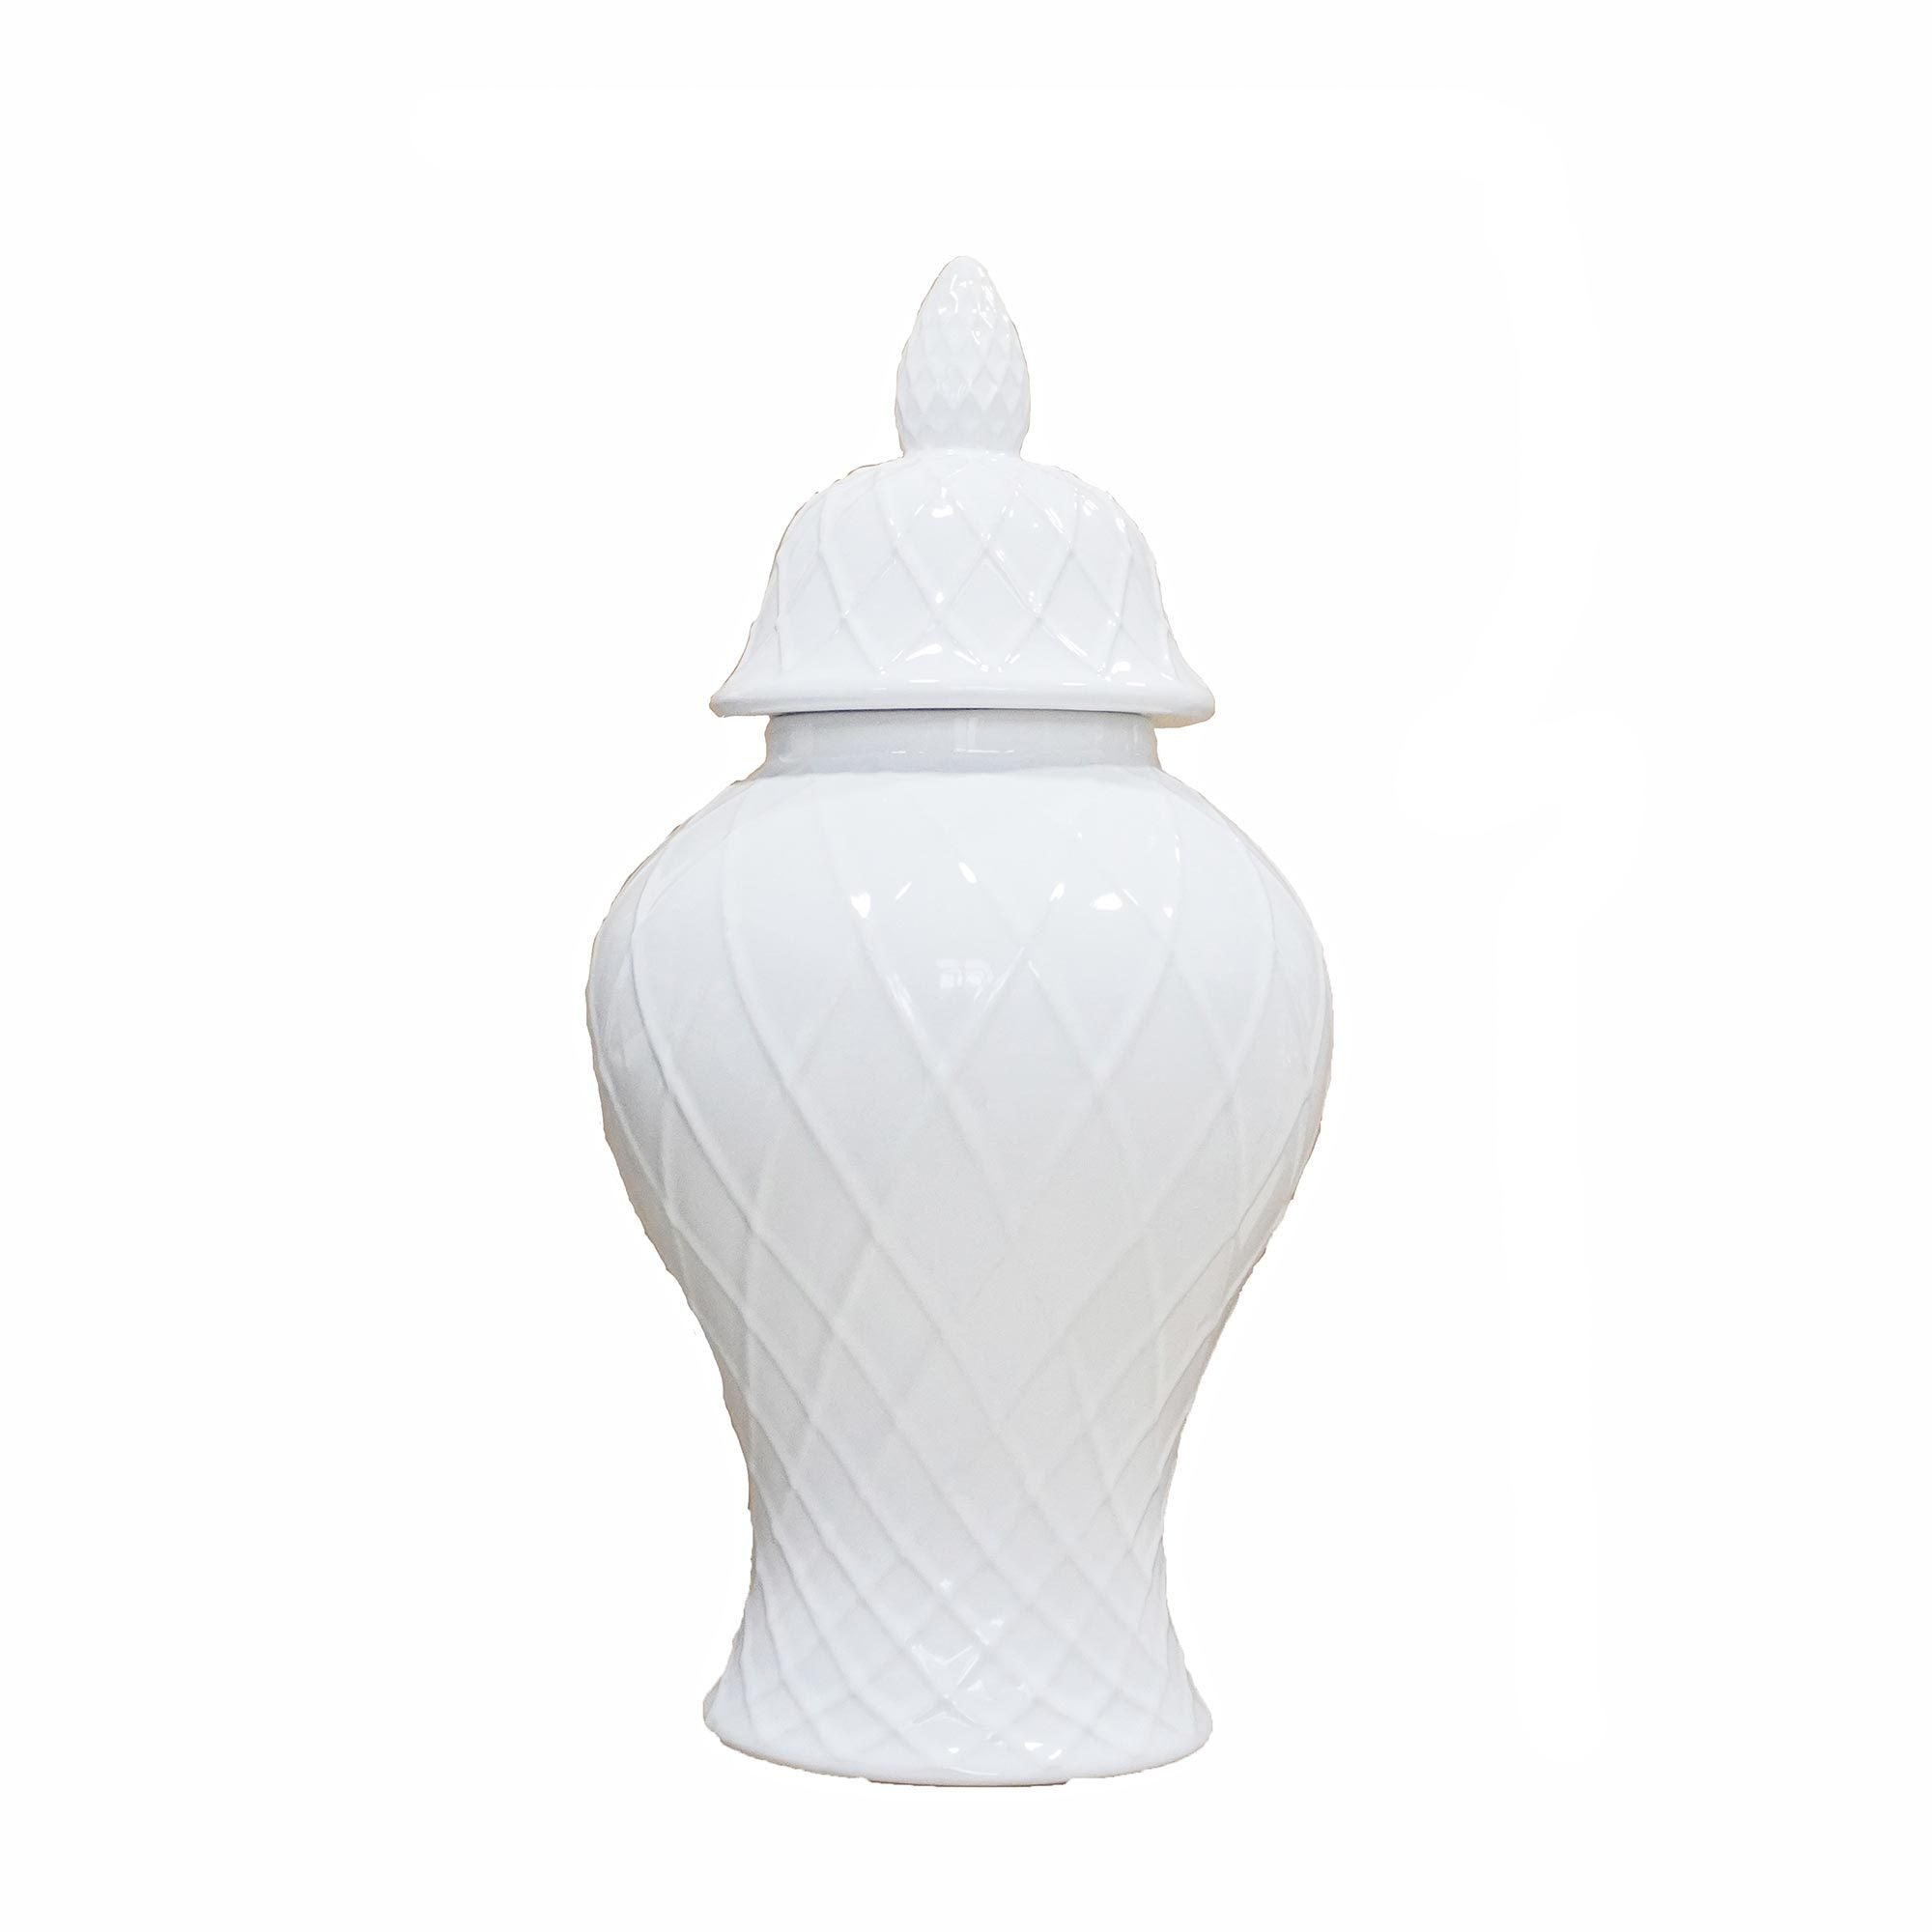 Elegant White Ceramic Ginger Jar with Decorative white-ceramic